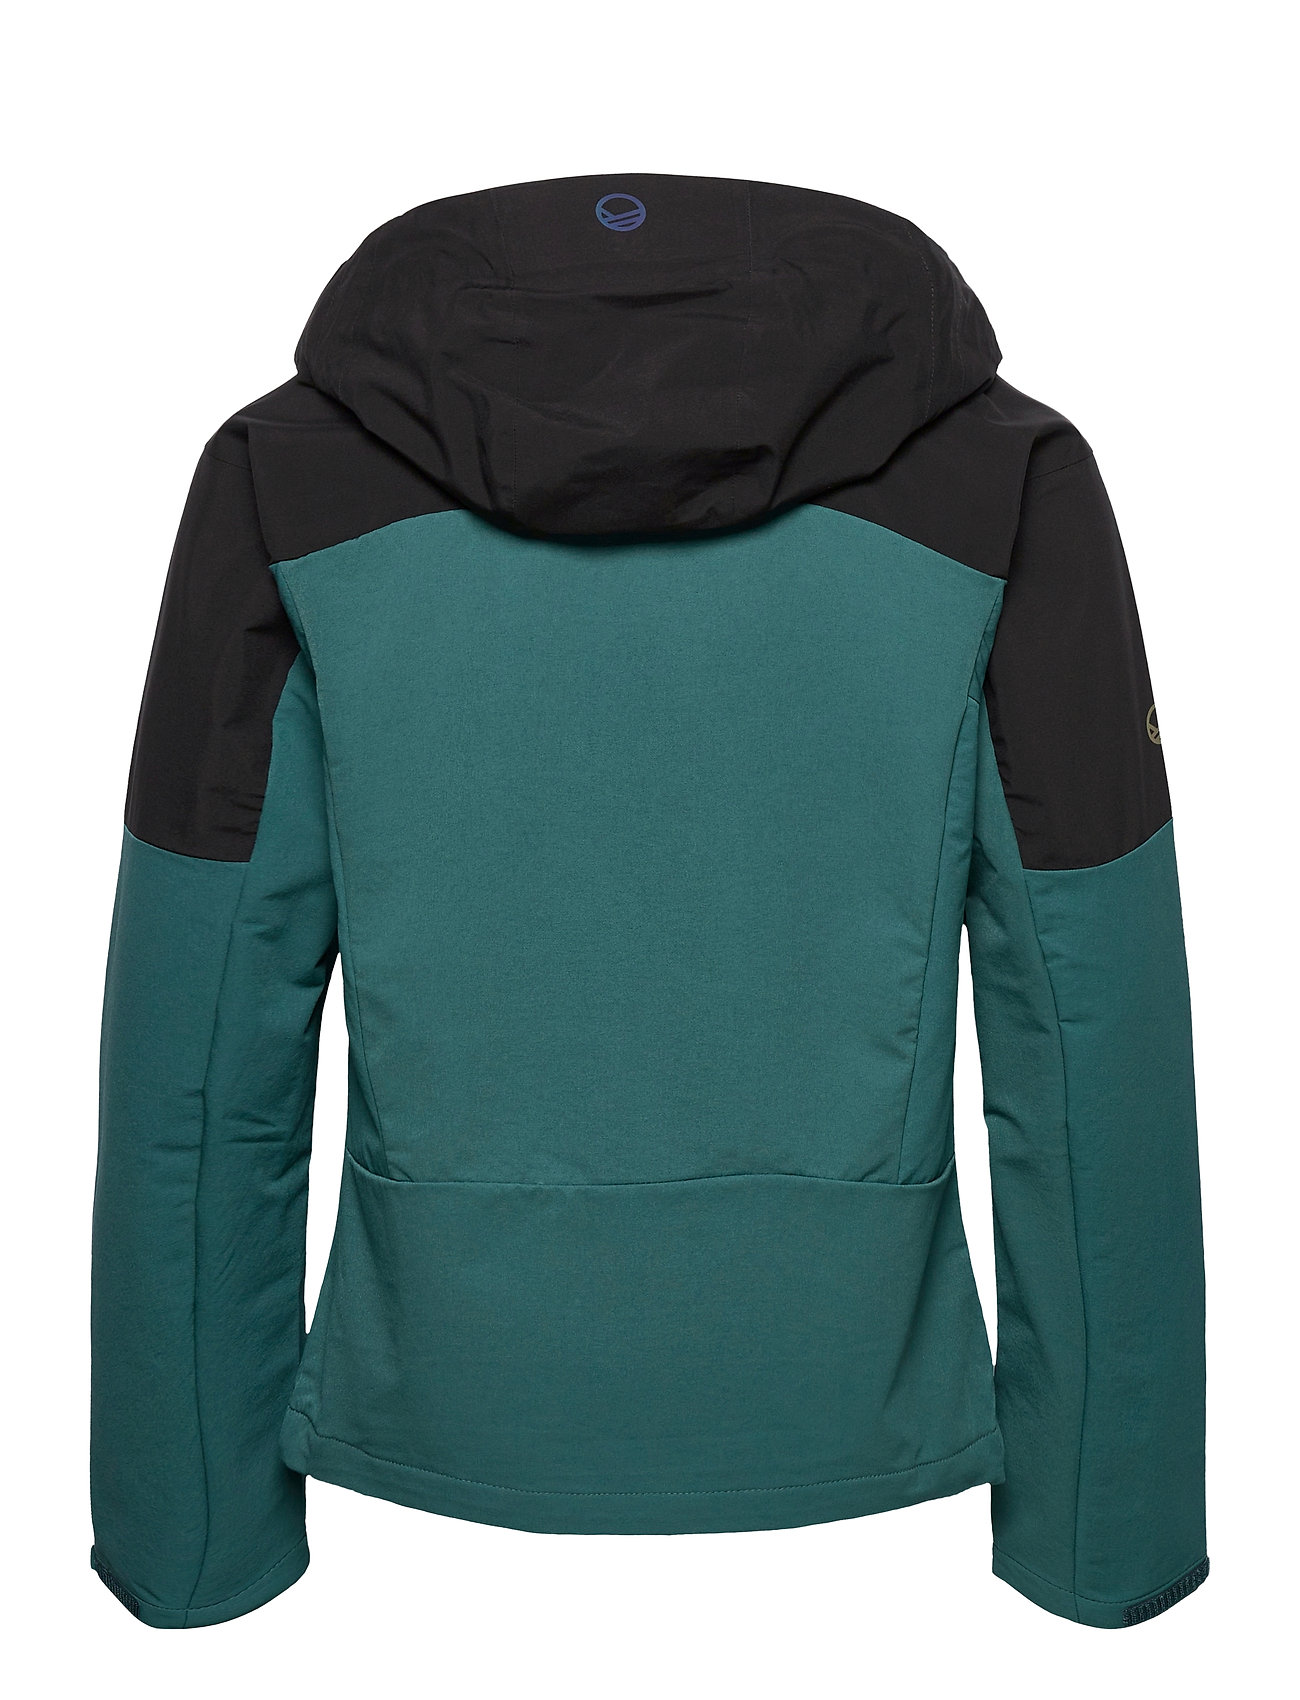 Pallas Warm Hybrid Jacket Outerwear Sport Jackets Grøn Halti jakker fra Halti til herre i Sort -